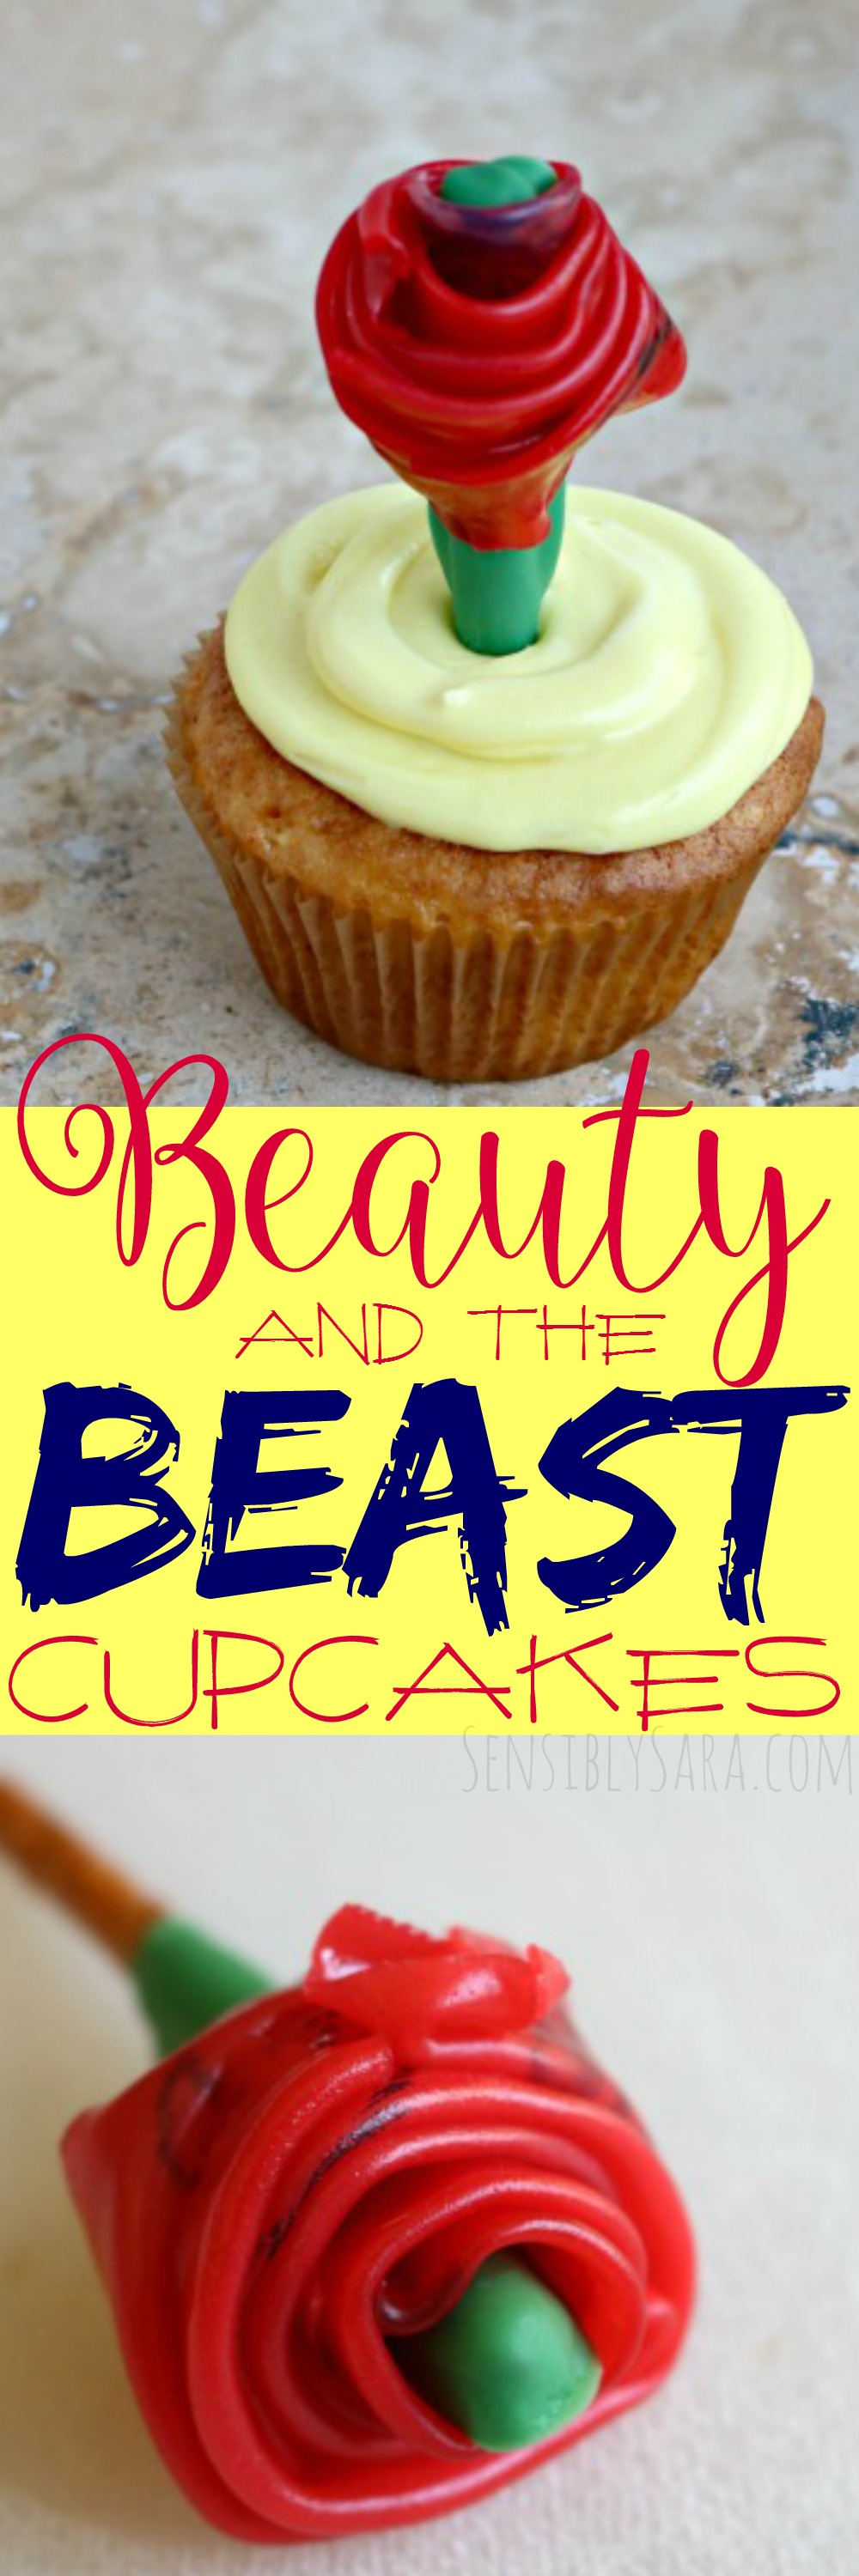 Beauty and the Beast Cupcakes | SensiblySara.com